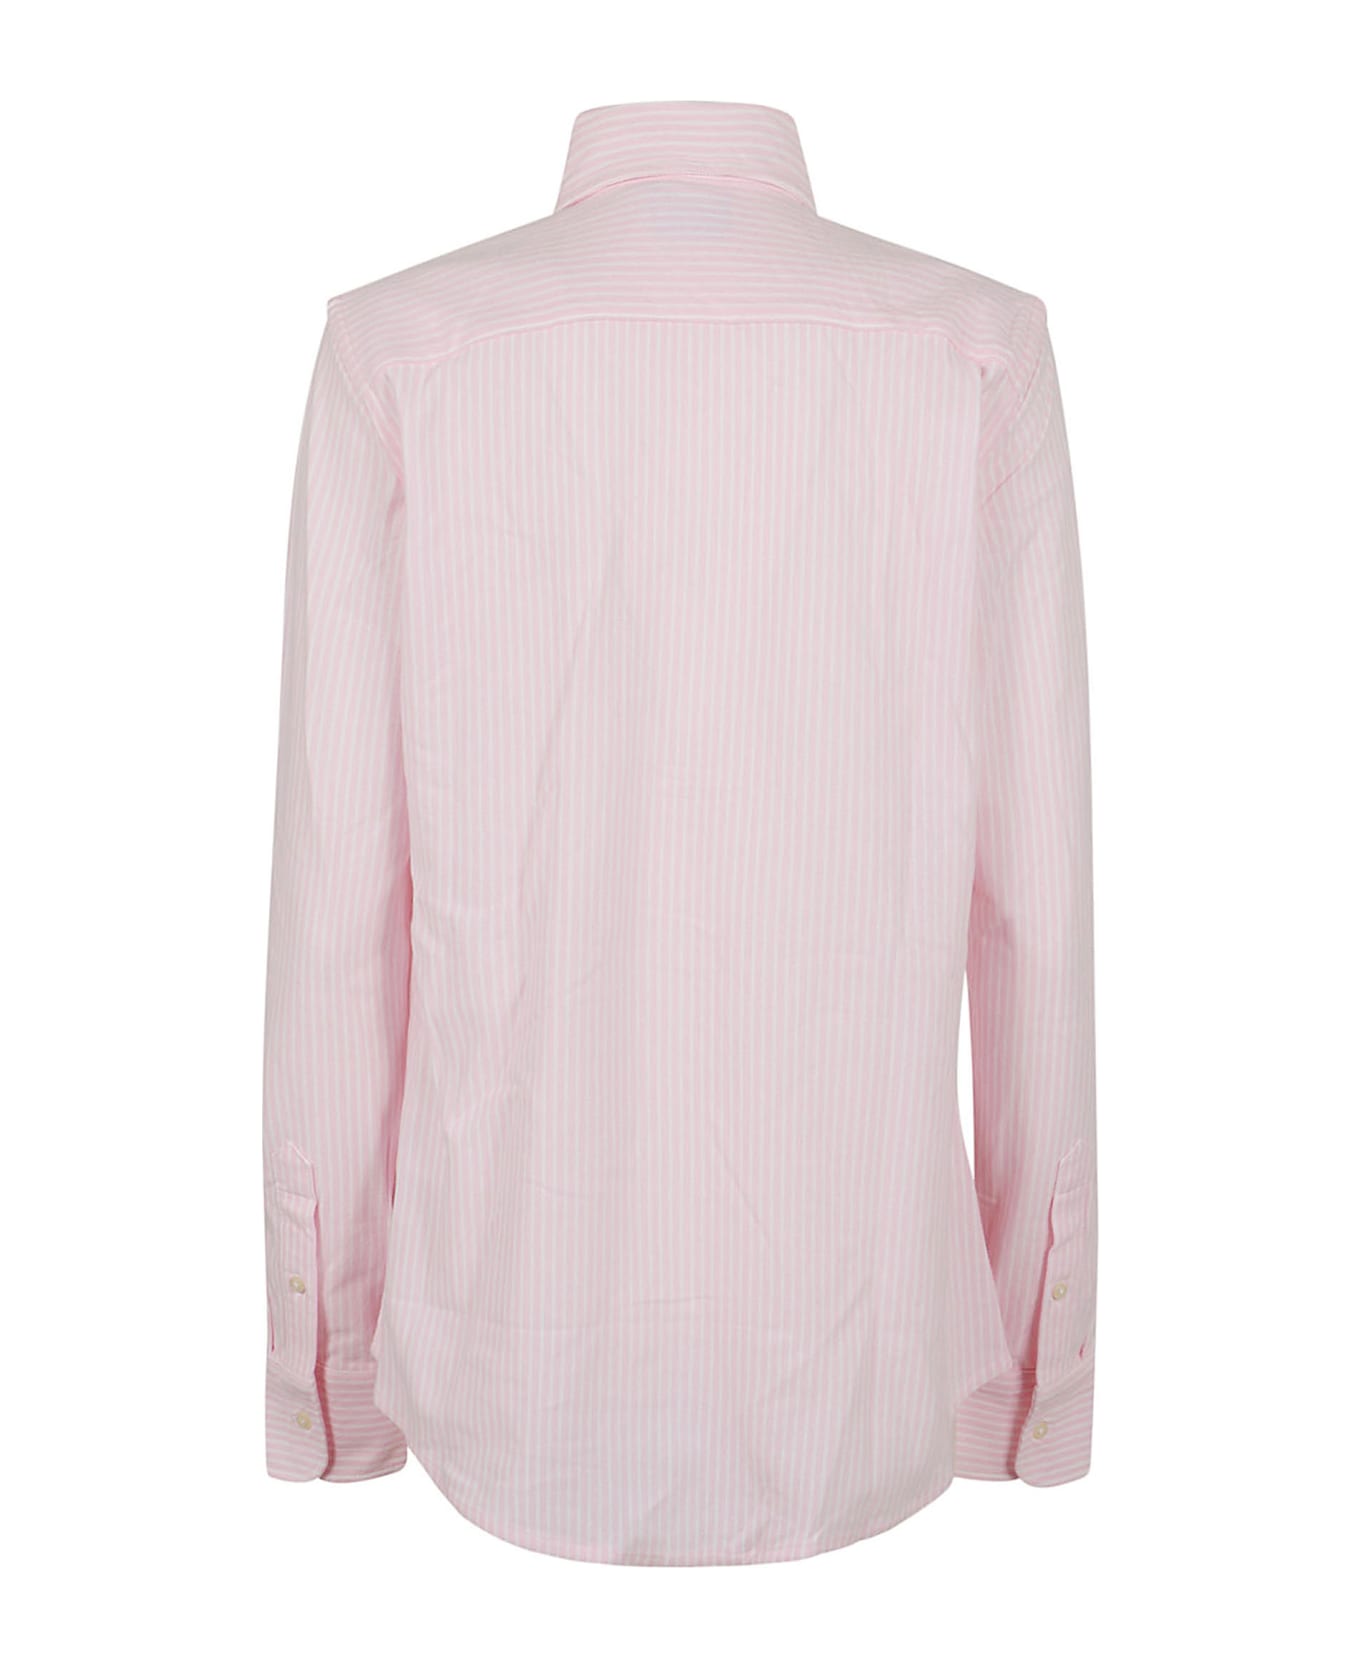 Polo Ralph Lauren Striped Long-sleeved Shirt - Carmel Pink White